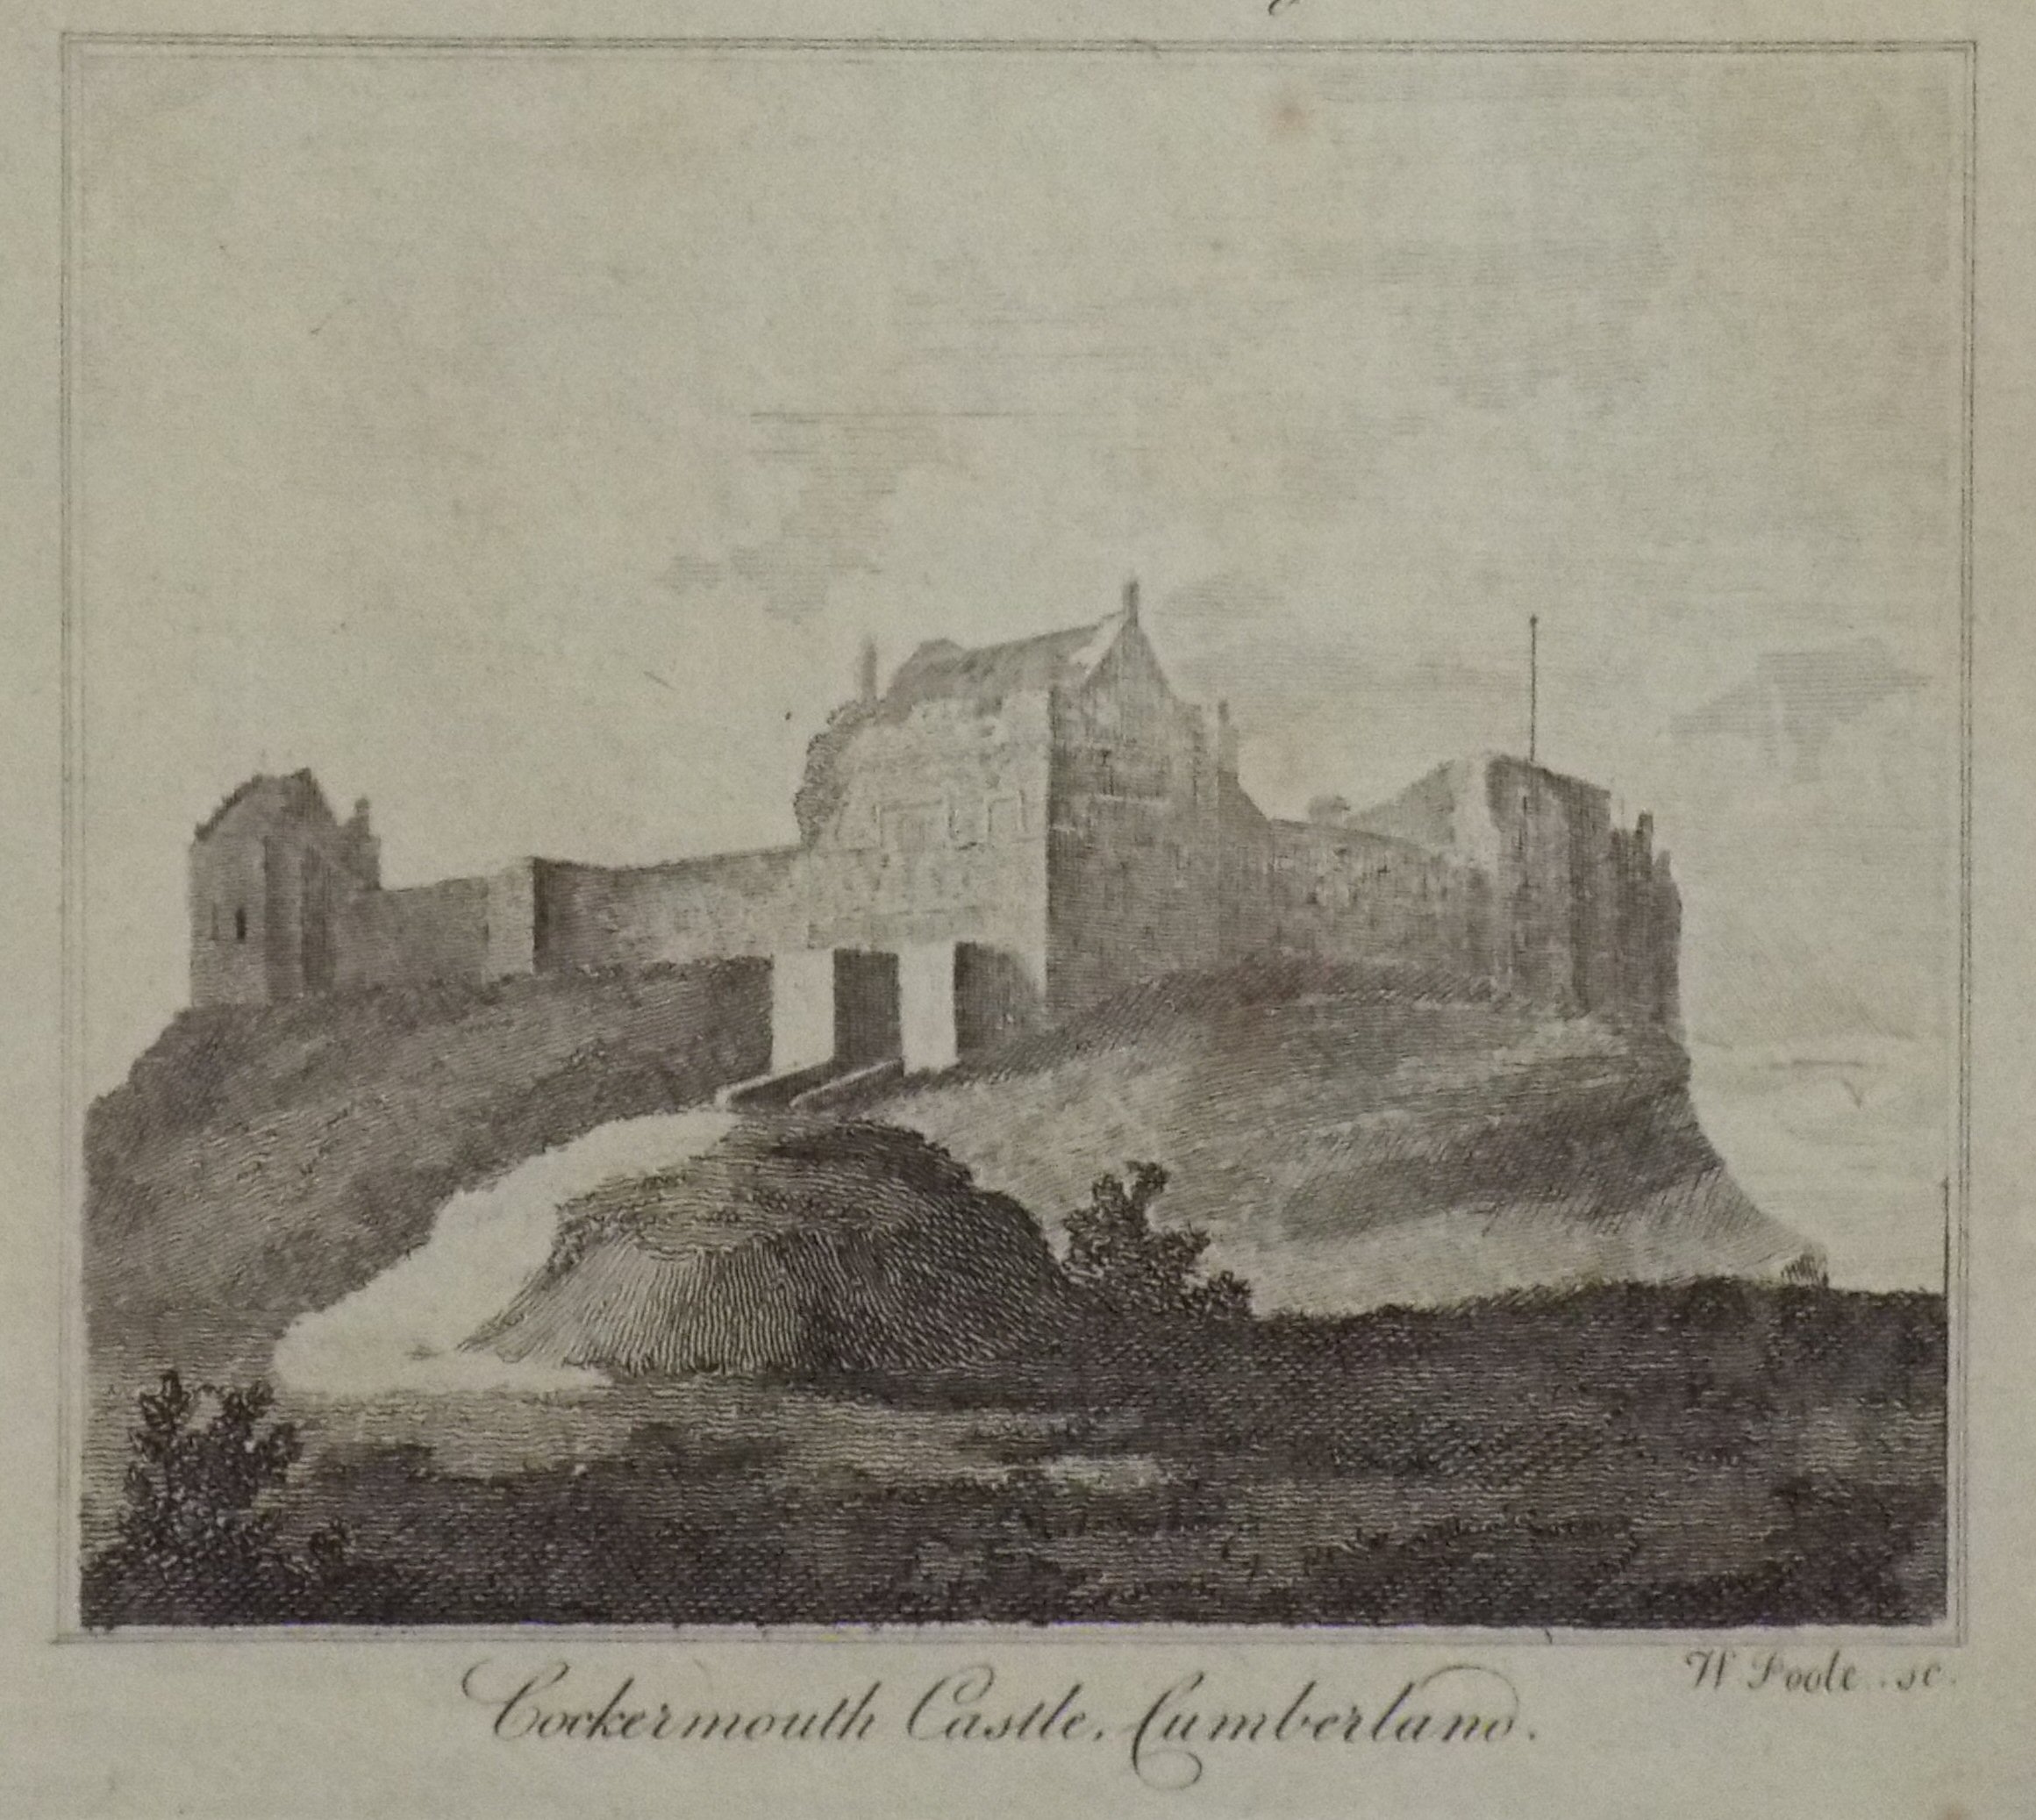 Print - Cockermouth Castle, Cumberland. - Poole